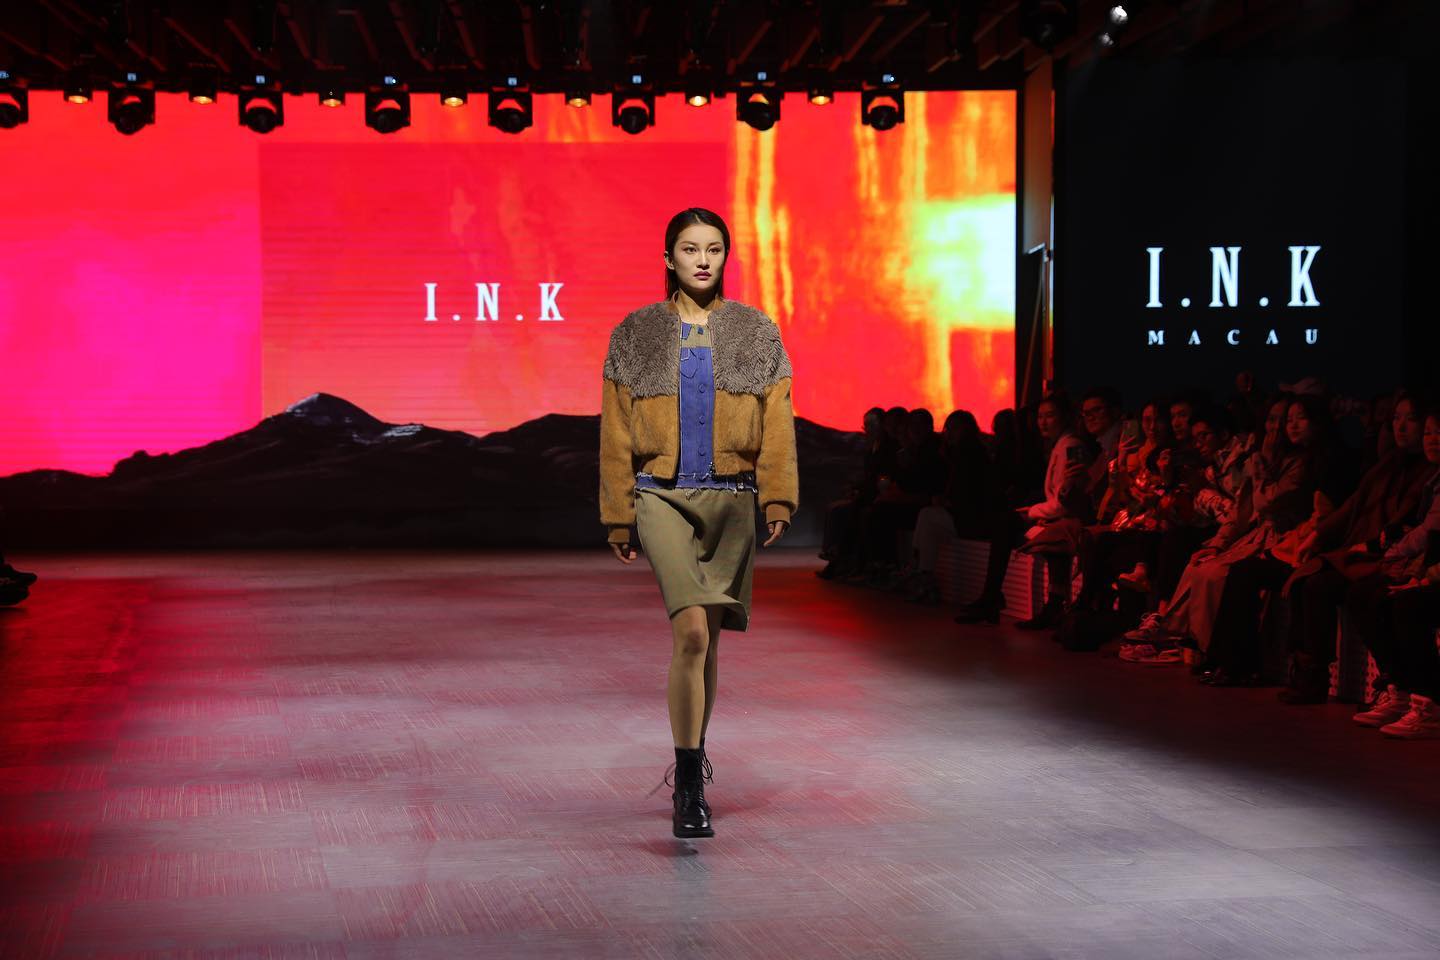 INK Fashion Brand Macau Source Brands Facebook Page